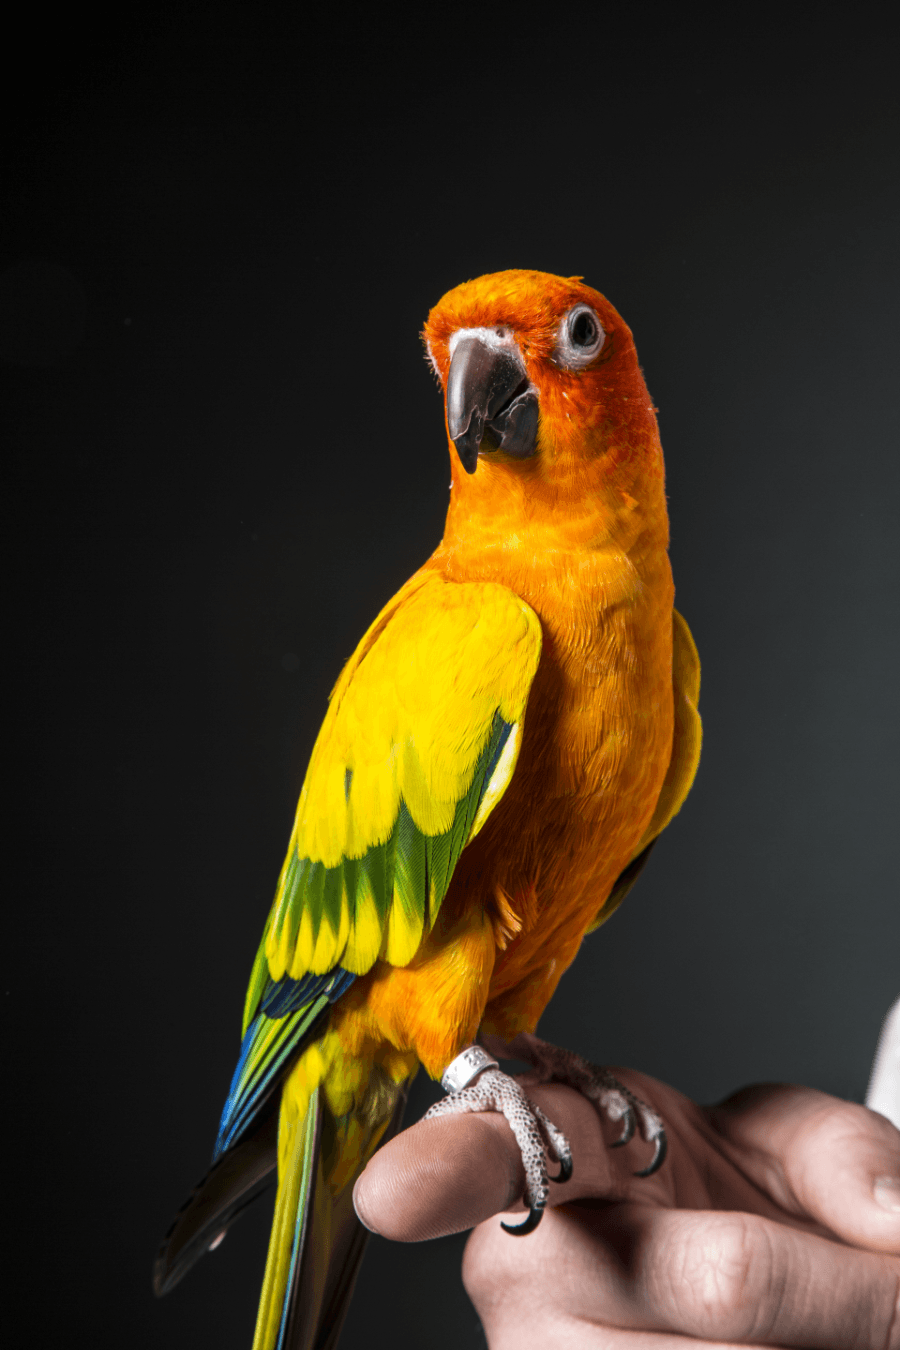 Maverick the Parrot Logo - Logan Paul | Official Website